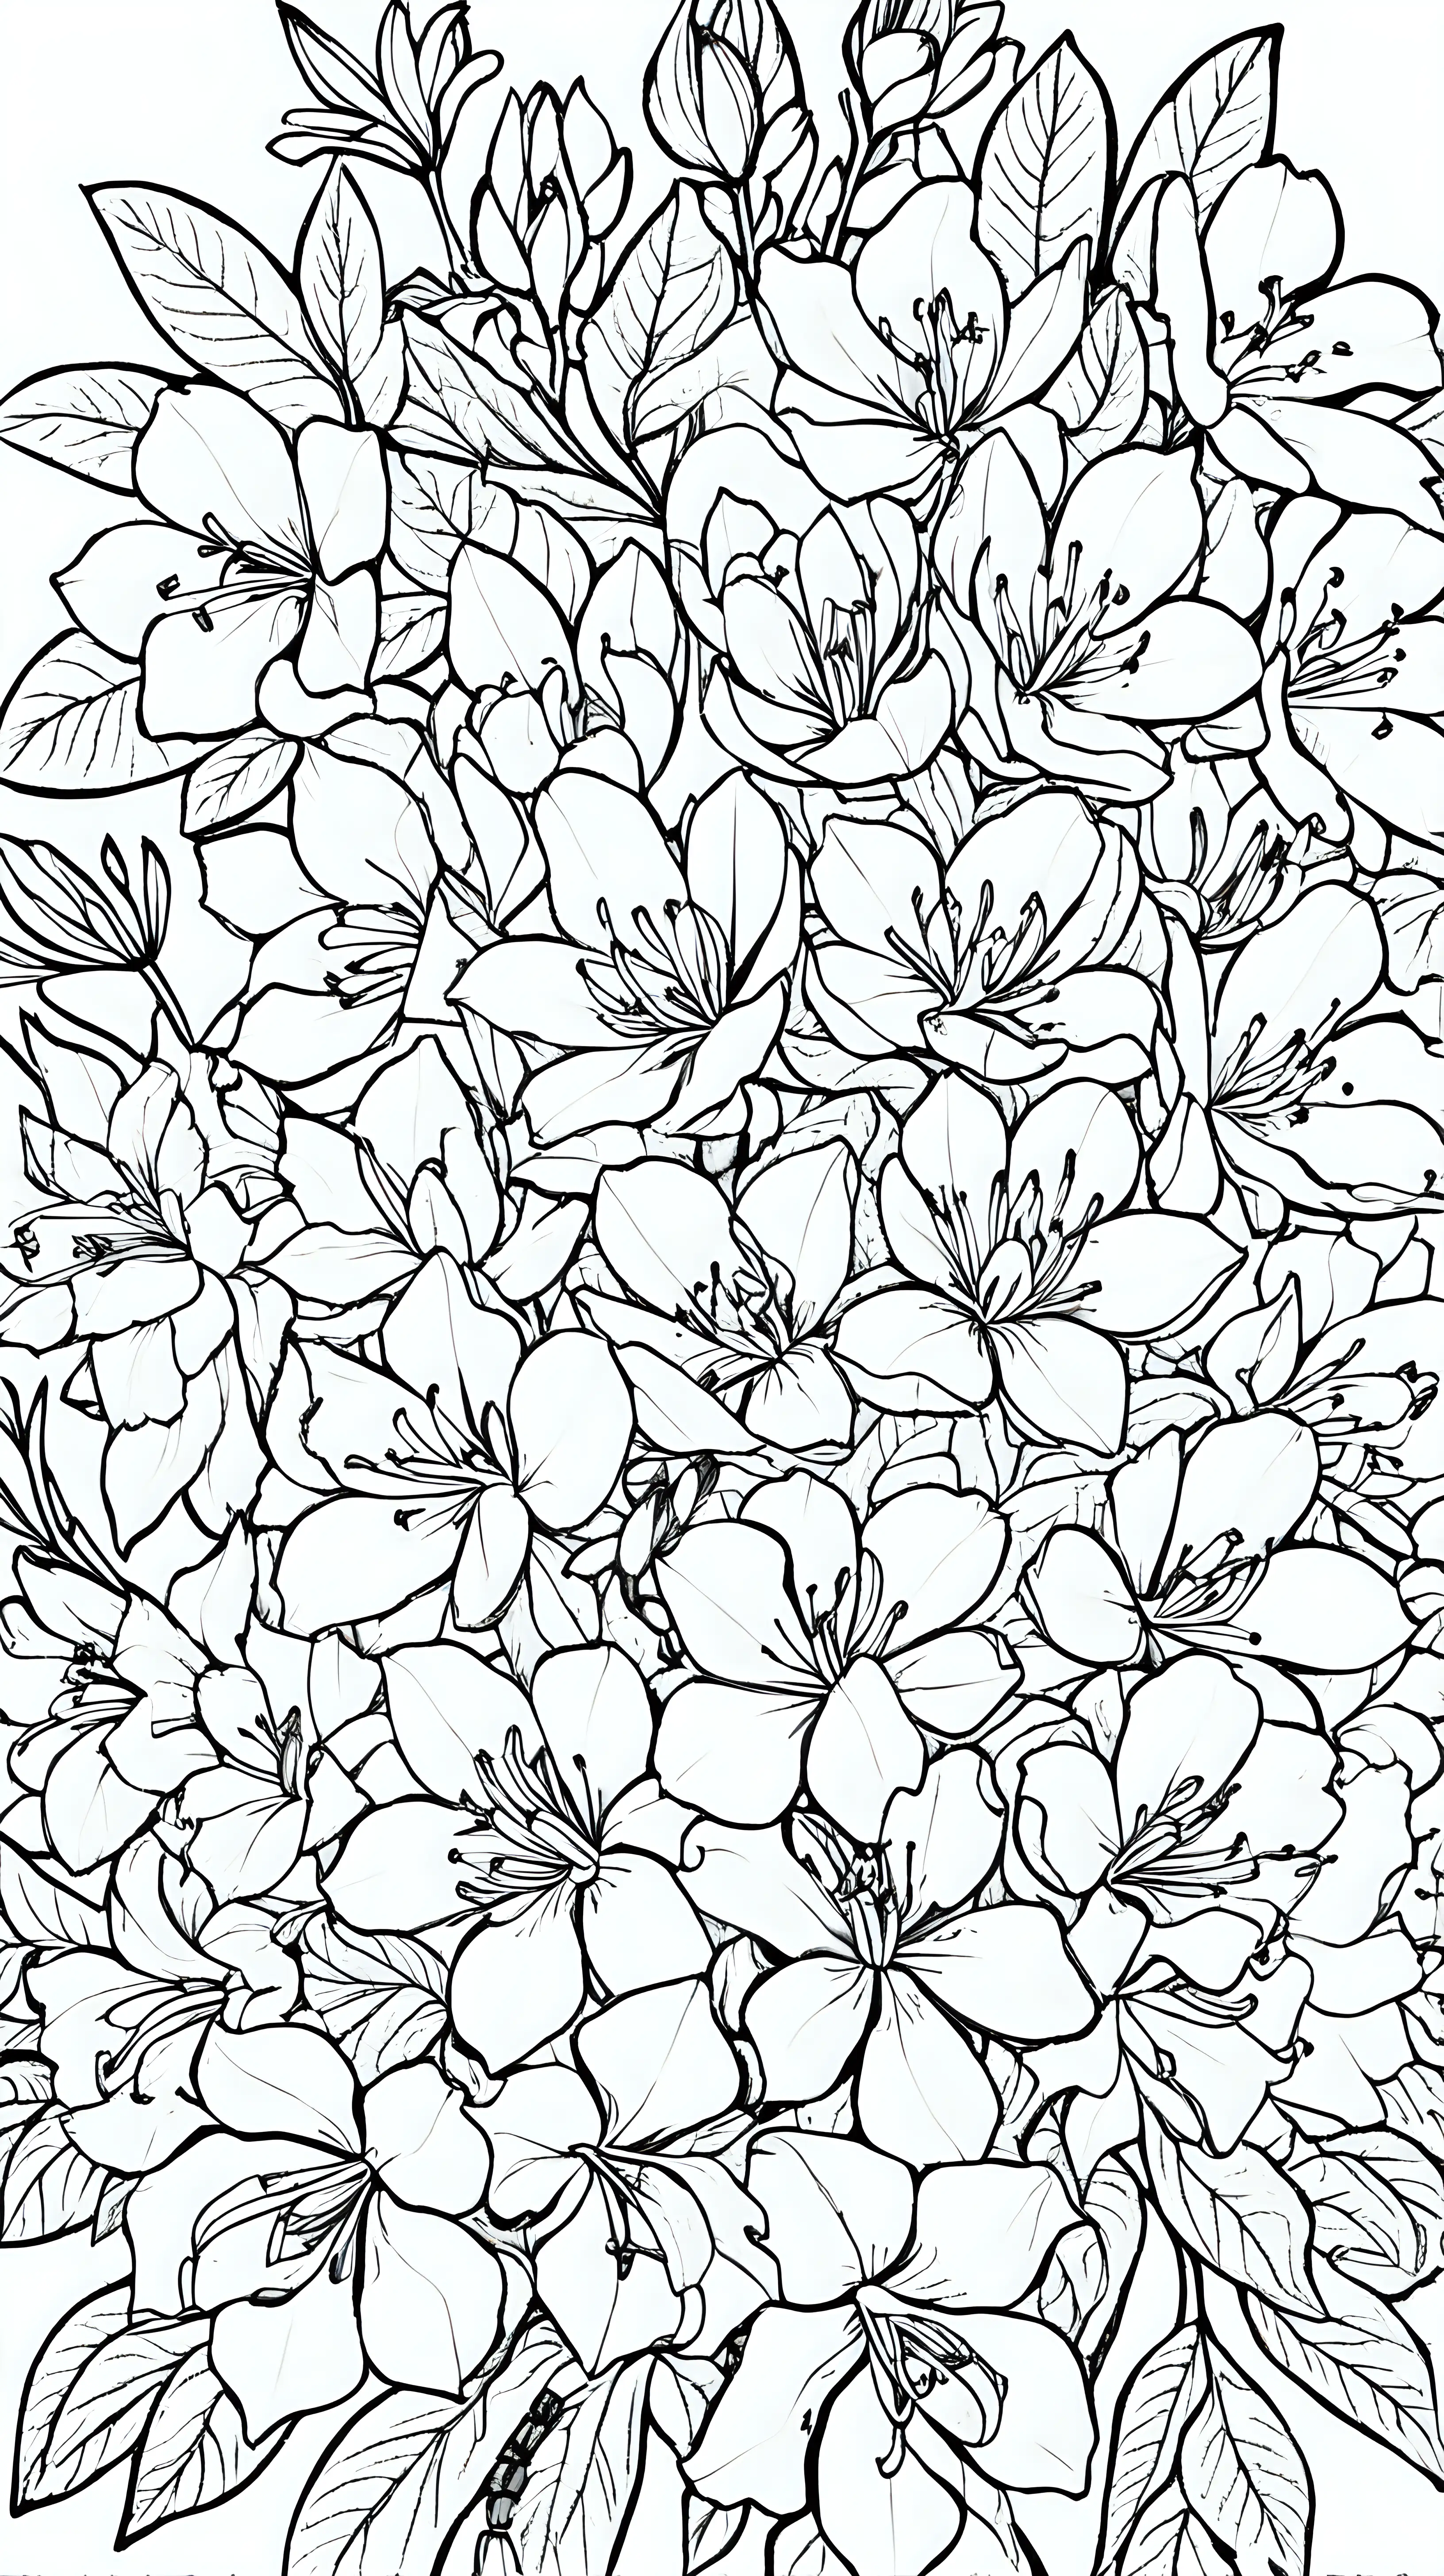 coloring book image, thin black lines, patterned floral mandala pattern, Azalea blossoms